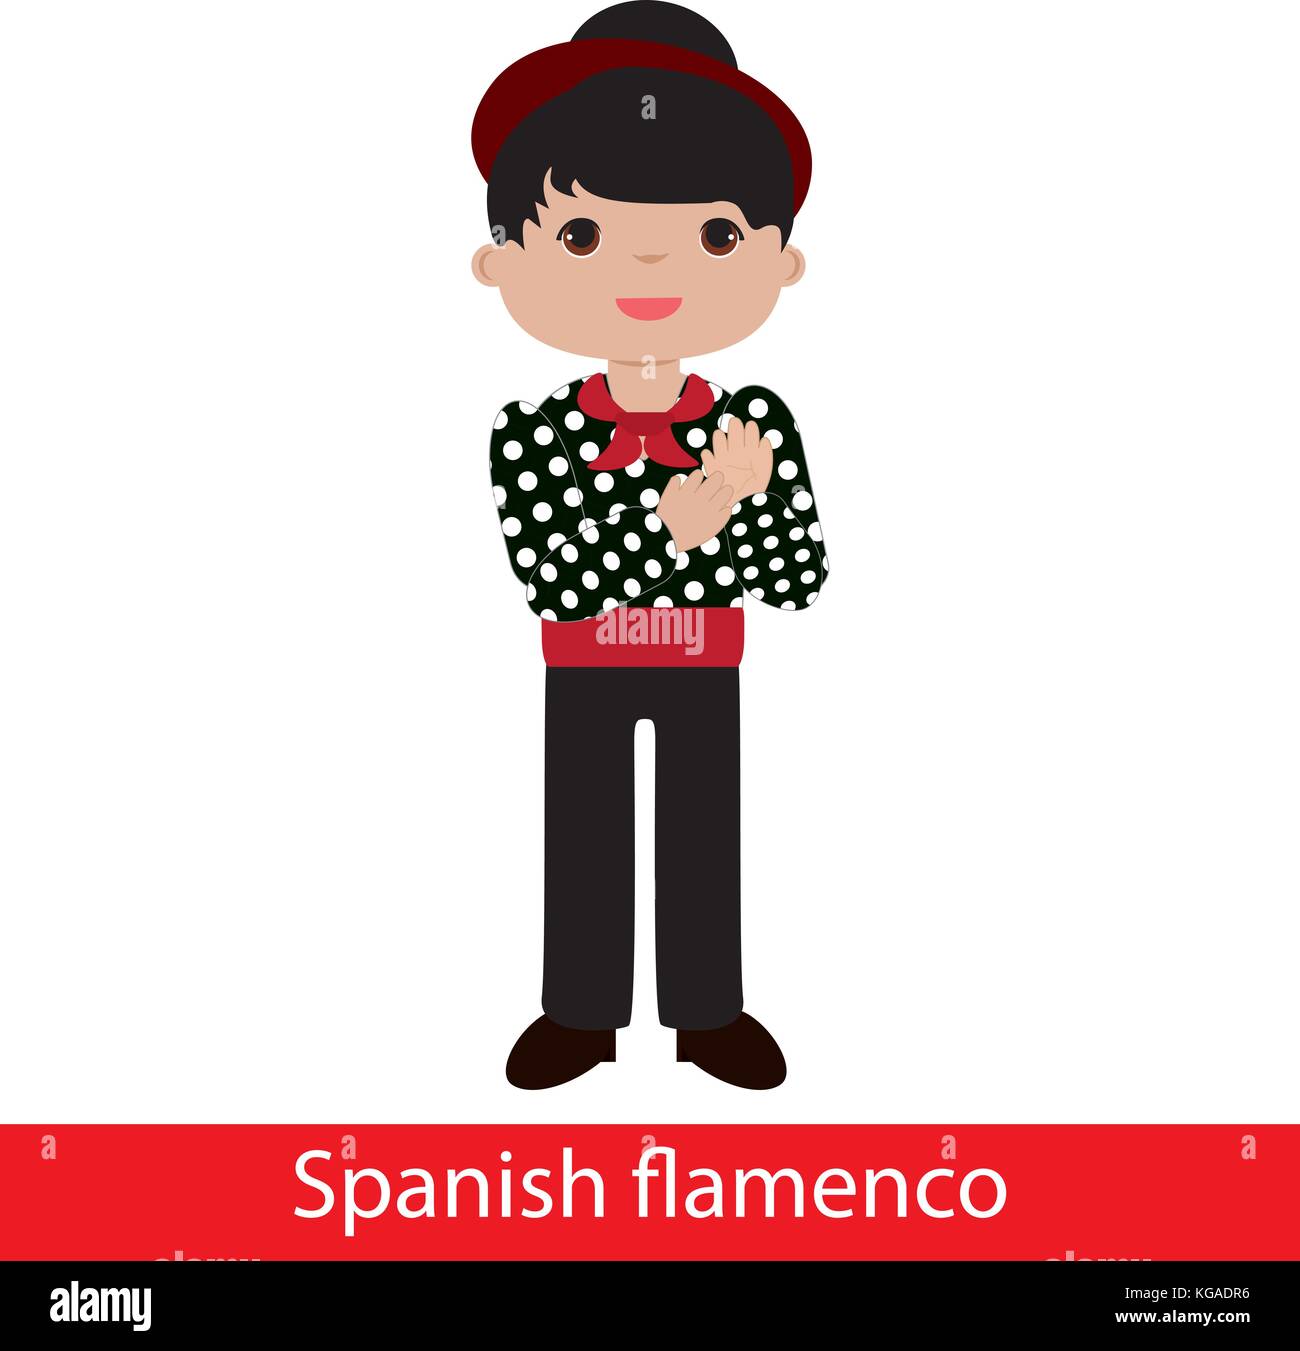 Flamenco boy with black shirt and white polka dots Stock Vector